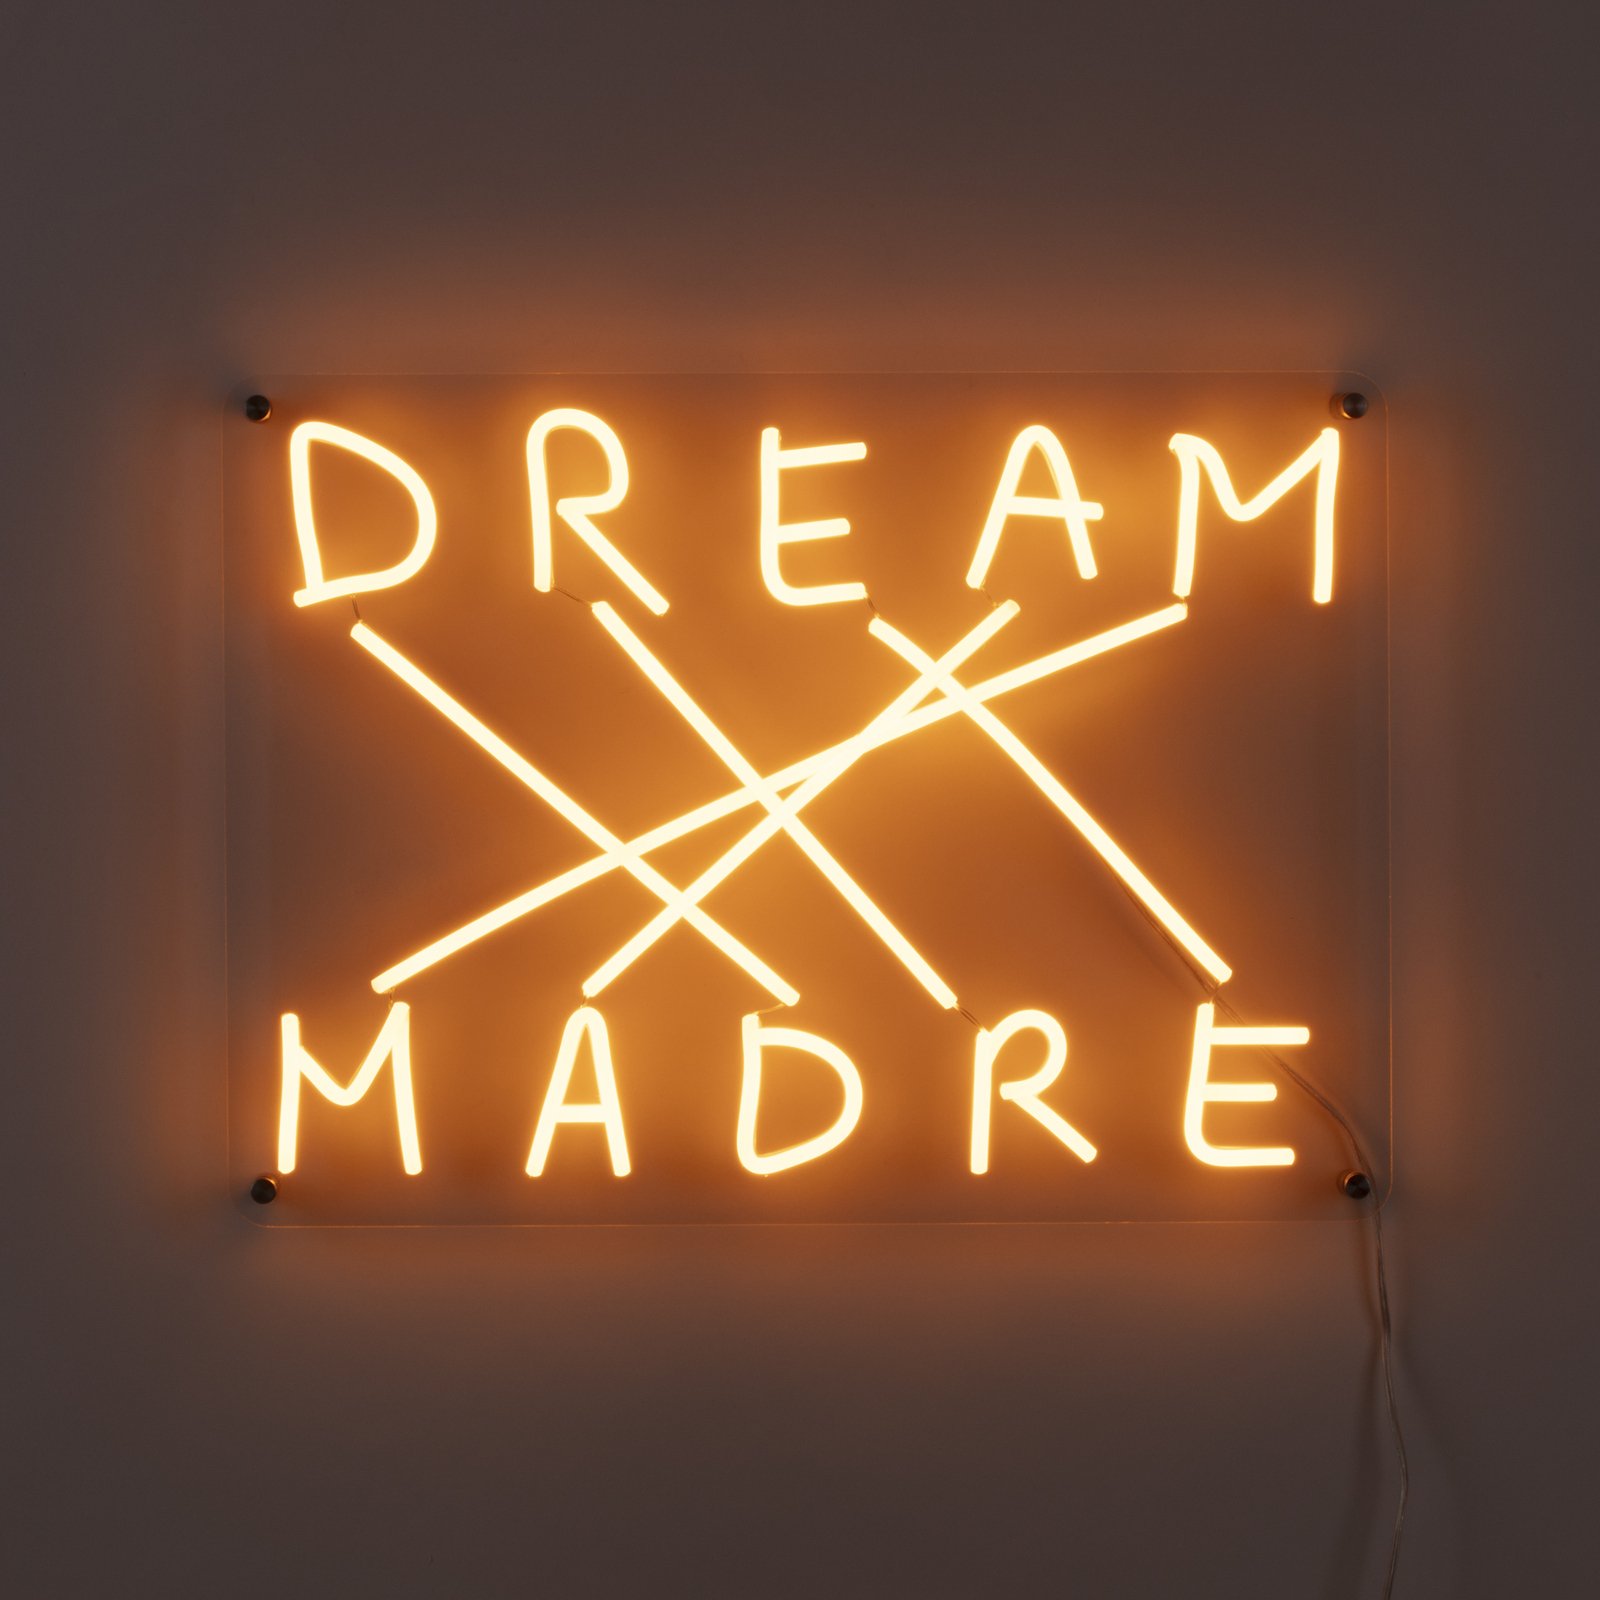 LED decoratie-wandlamp Dream-Madre, geel